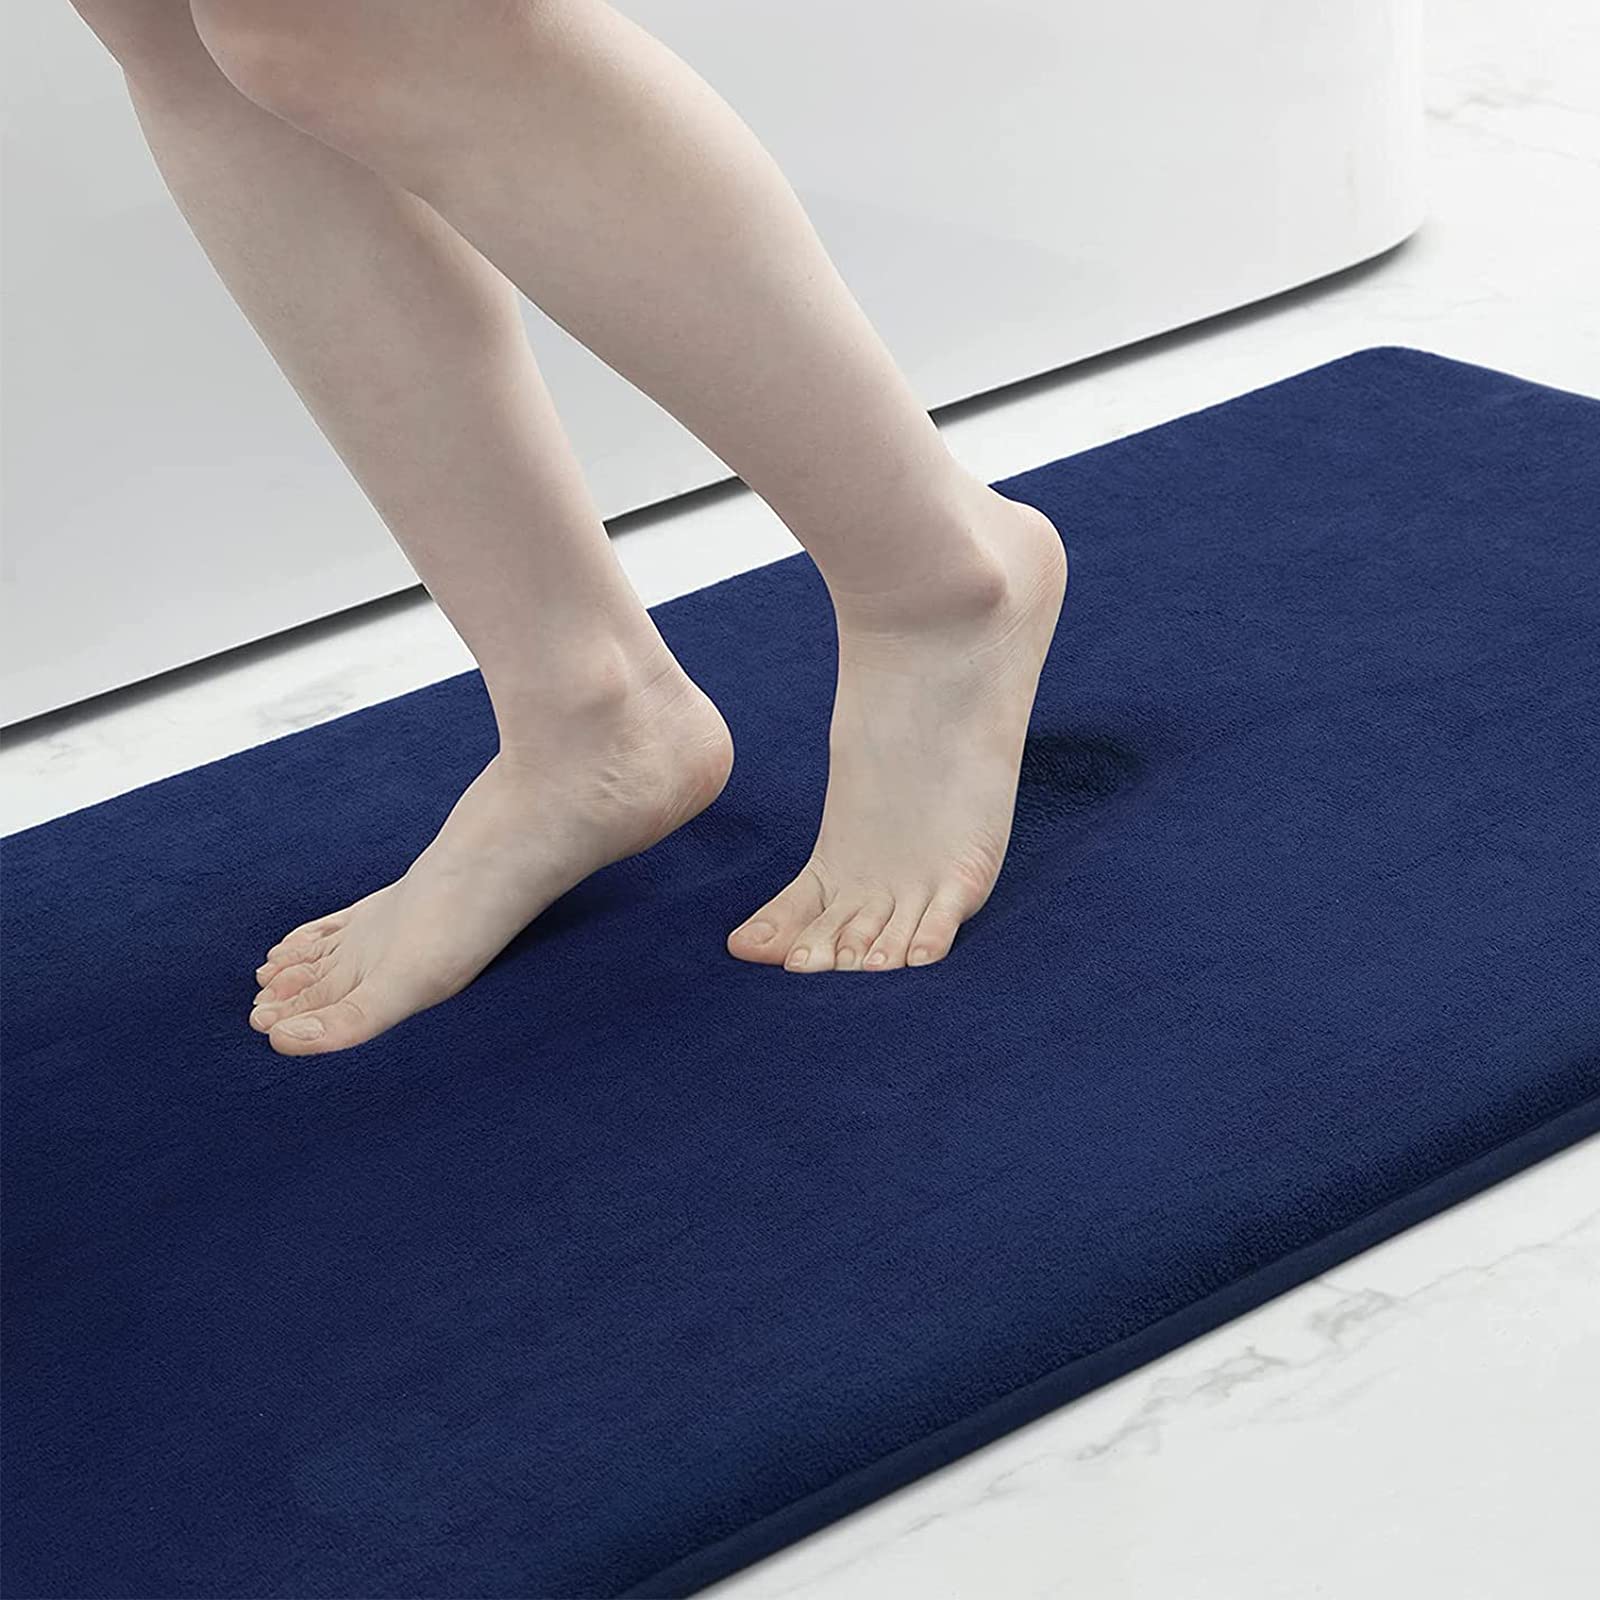 Memory Foam Bath Mat Anti-Slip Shower Carpet Soft Foot Pad Decoration Floor Protector Absorbent Quick Dry Bathroom Rug Mats & Rugs DailyAlertDeals 43x61cm(17x24inch) China navy blue